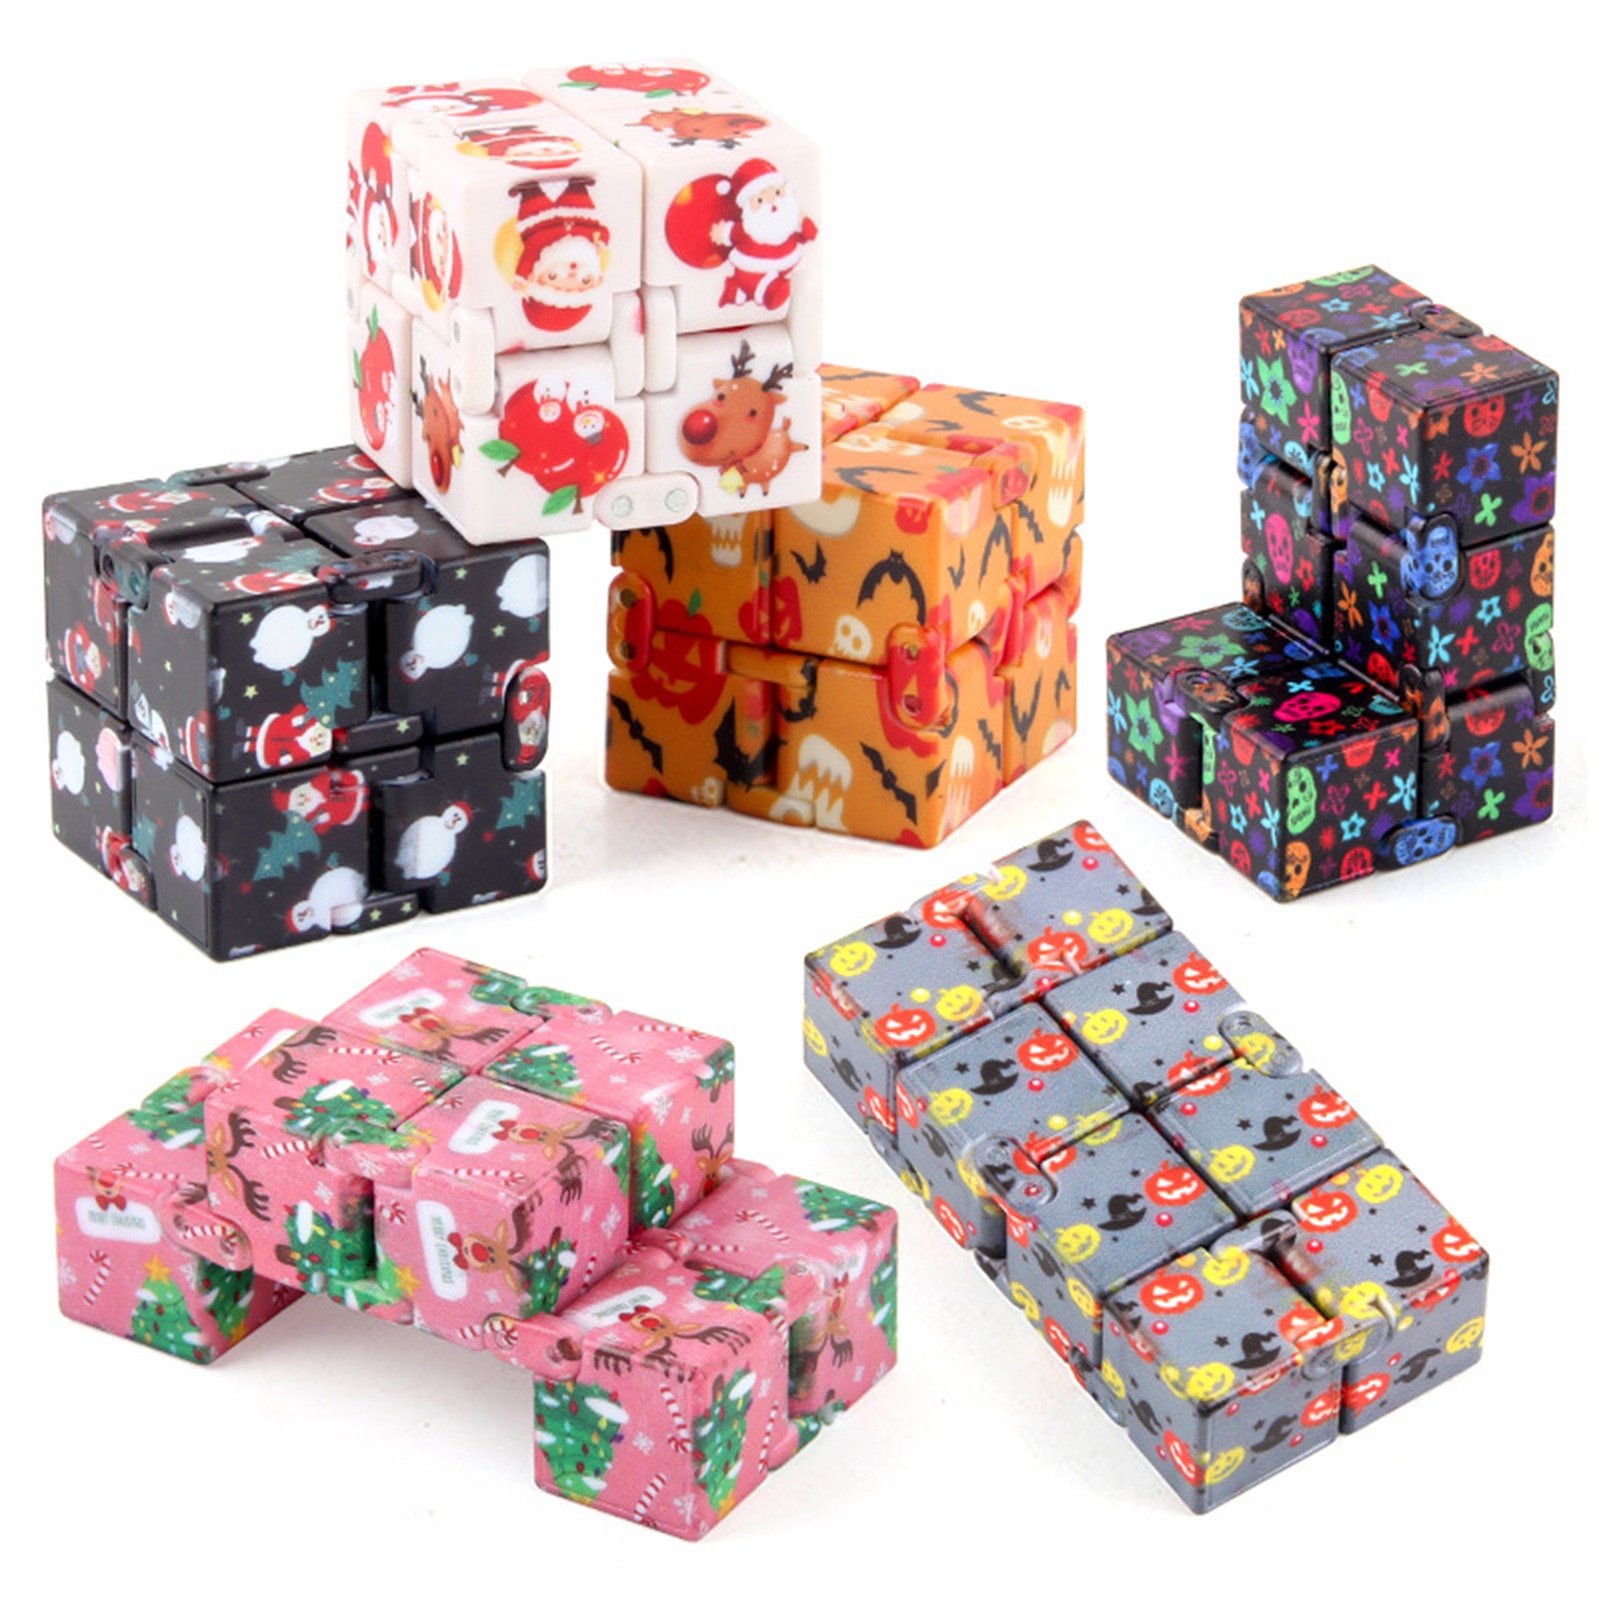 Creative Infinite Cube Anti stress Fidget Toys Infinity Cube Magic Cube Office Flip Cubic Puzzle Stop 4 - Simple Dimple Fidget